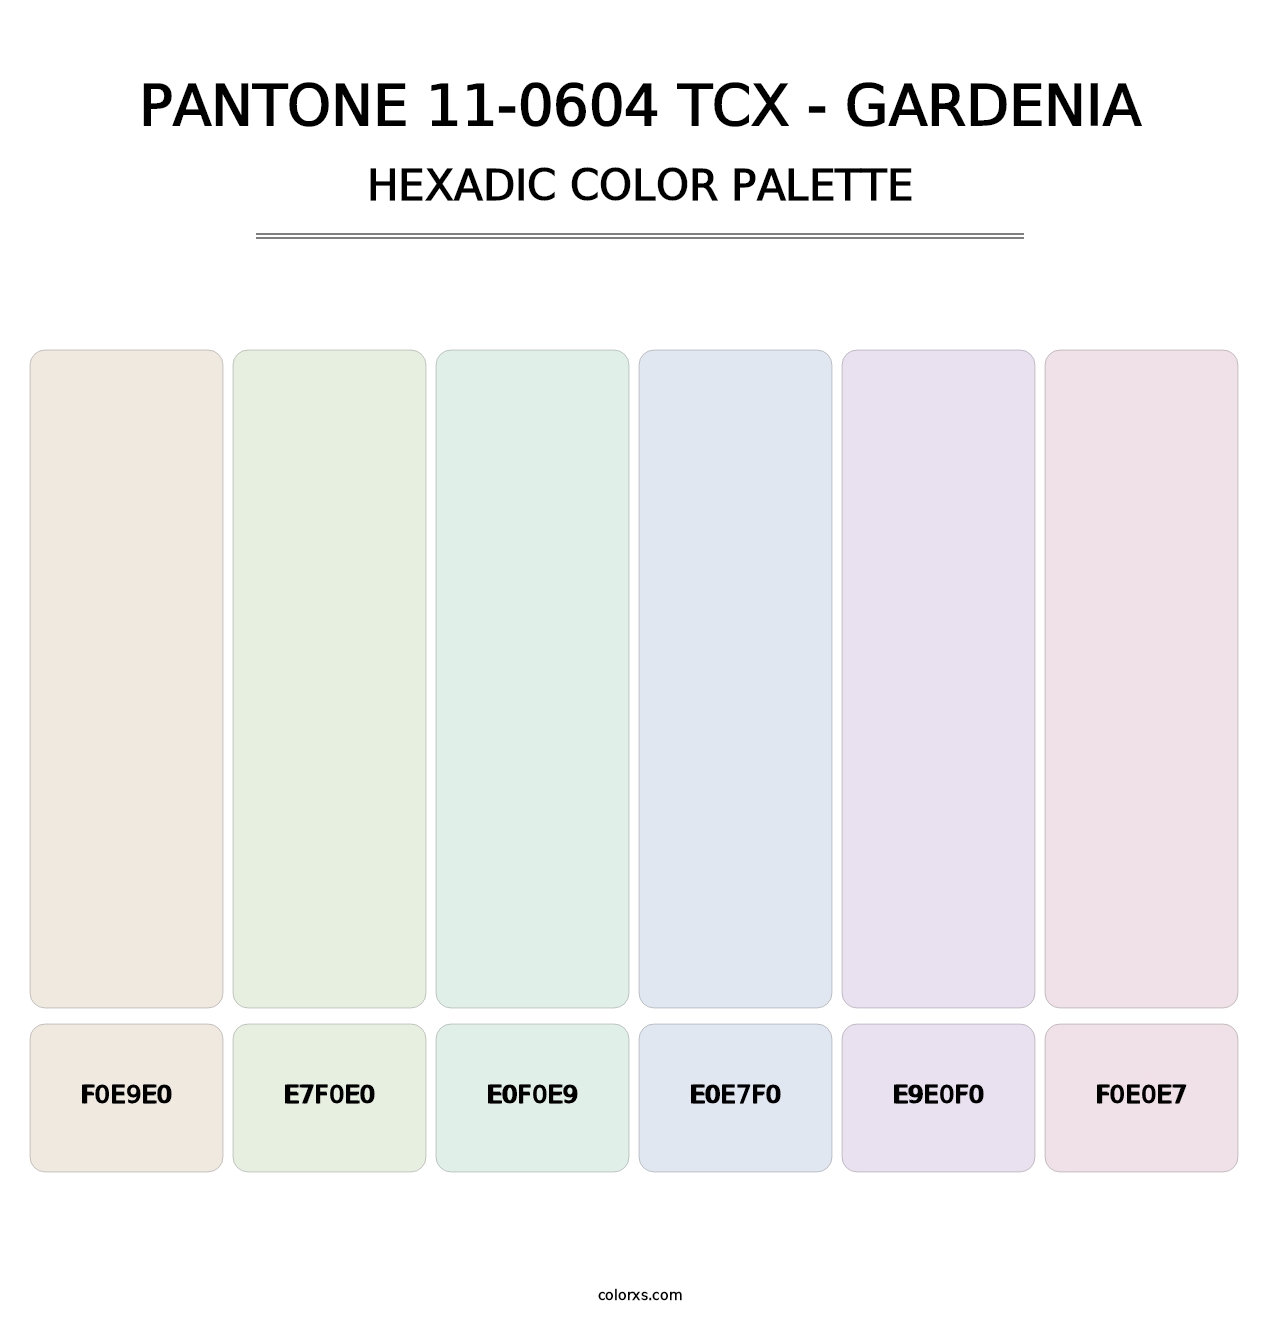 PANTONE 11-0604 TCX - Gardenia - Hexadic Color Palette